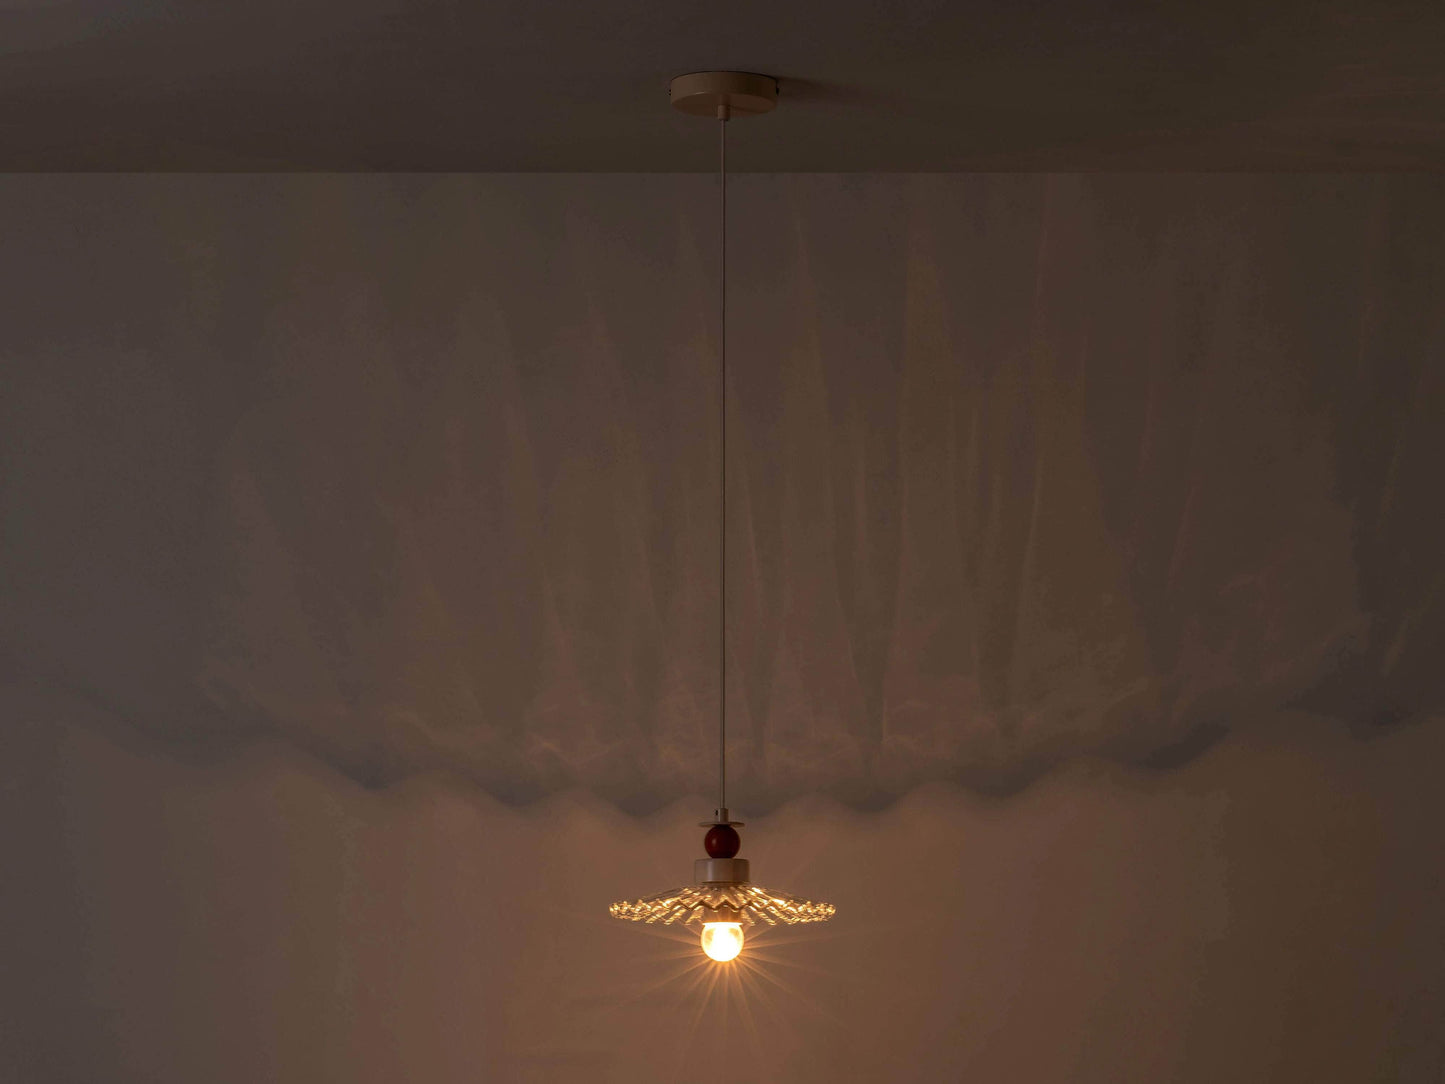 The Ribbed pendant ceiling light - Houseof x Emma Gurner